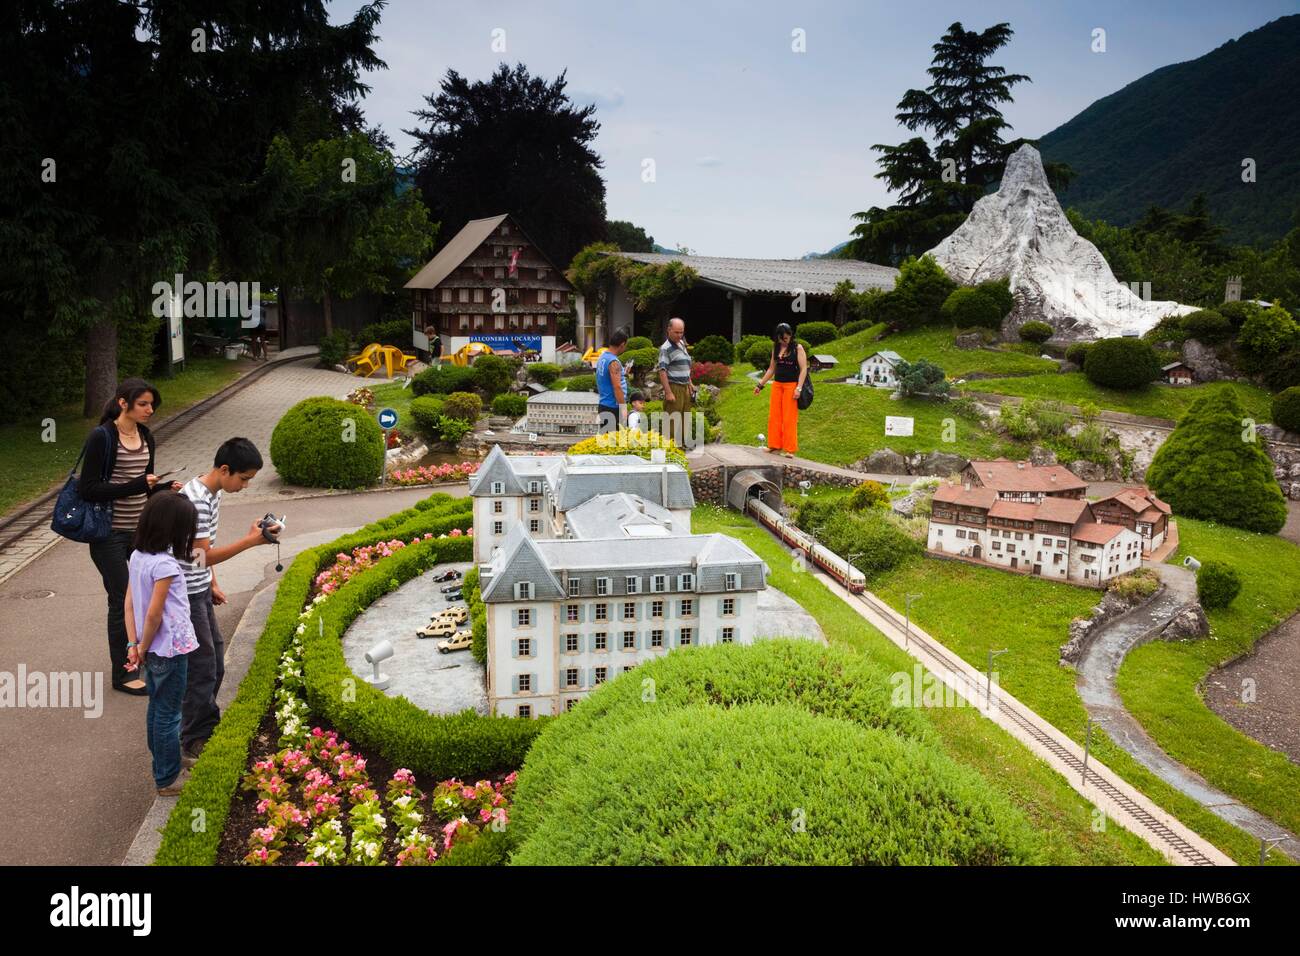 Switzerland, Ticino, Lake Lugano, Melide, Swissminiatur, Miniature Switzerland model theme park, and minature Matterhorn Stock Photo